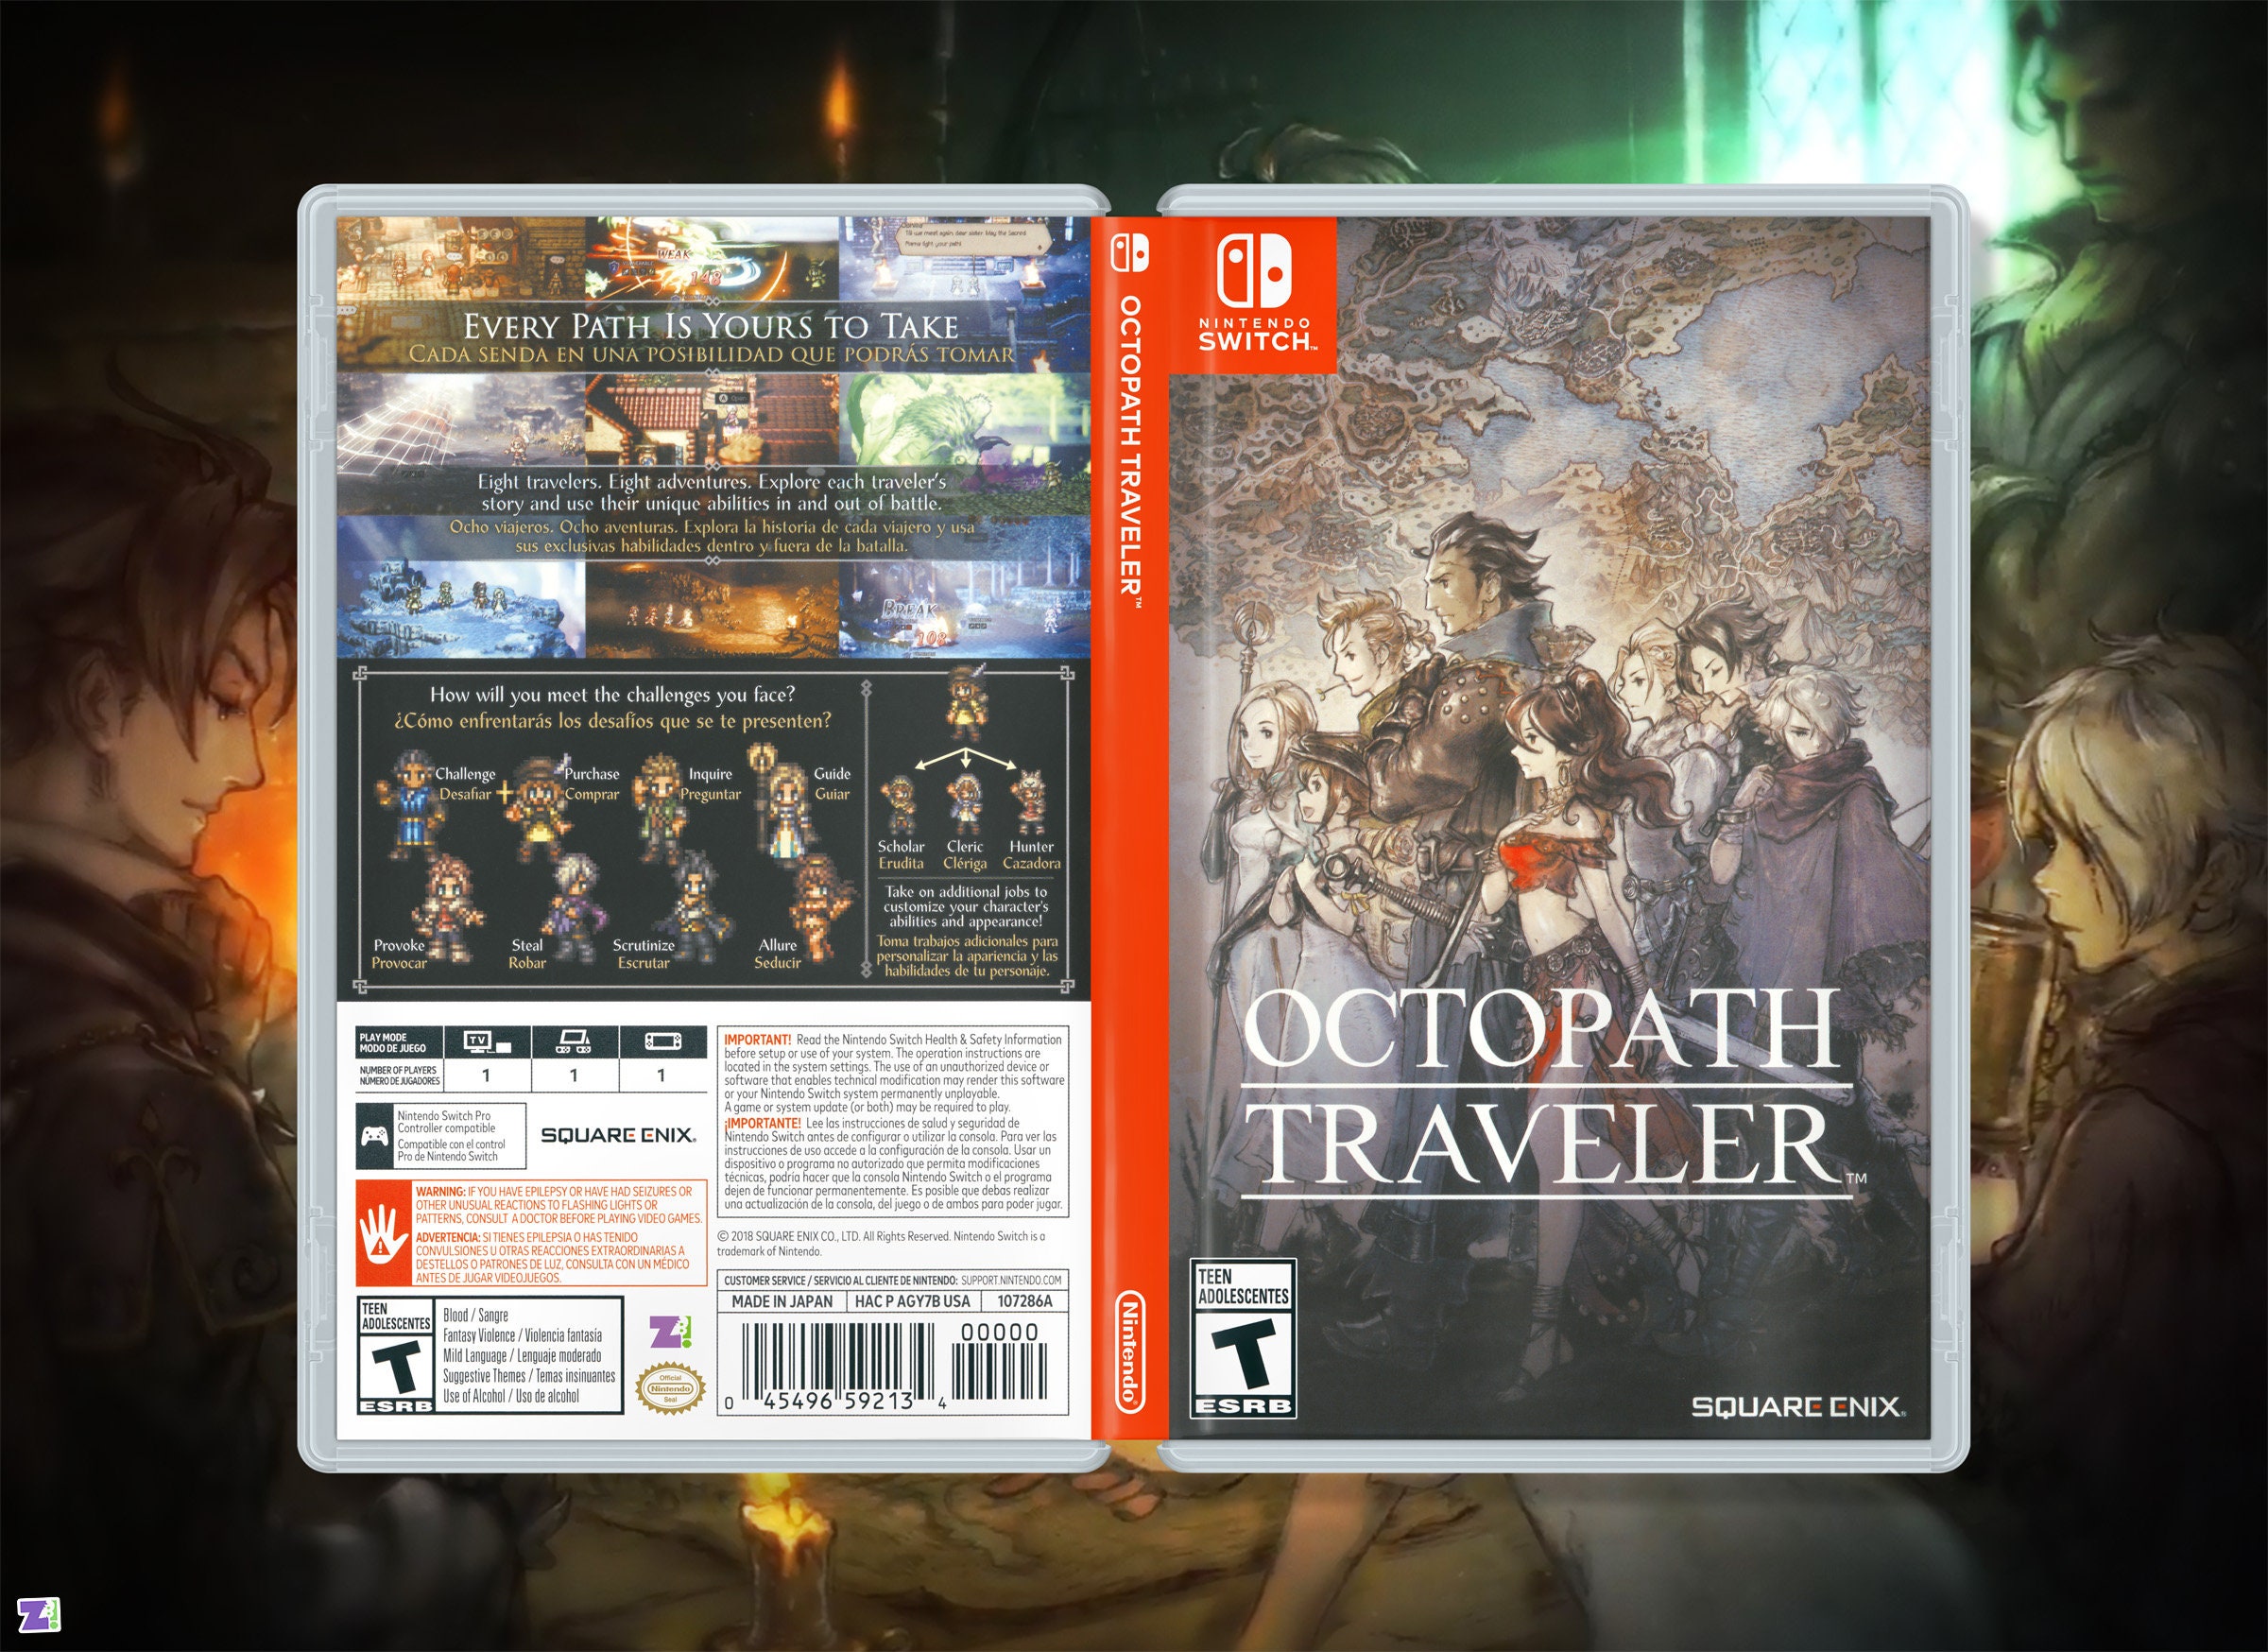  Octopath Traveler - Nintendo Switch [Digital Code] : Video Games